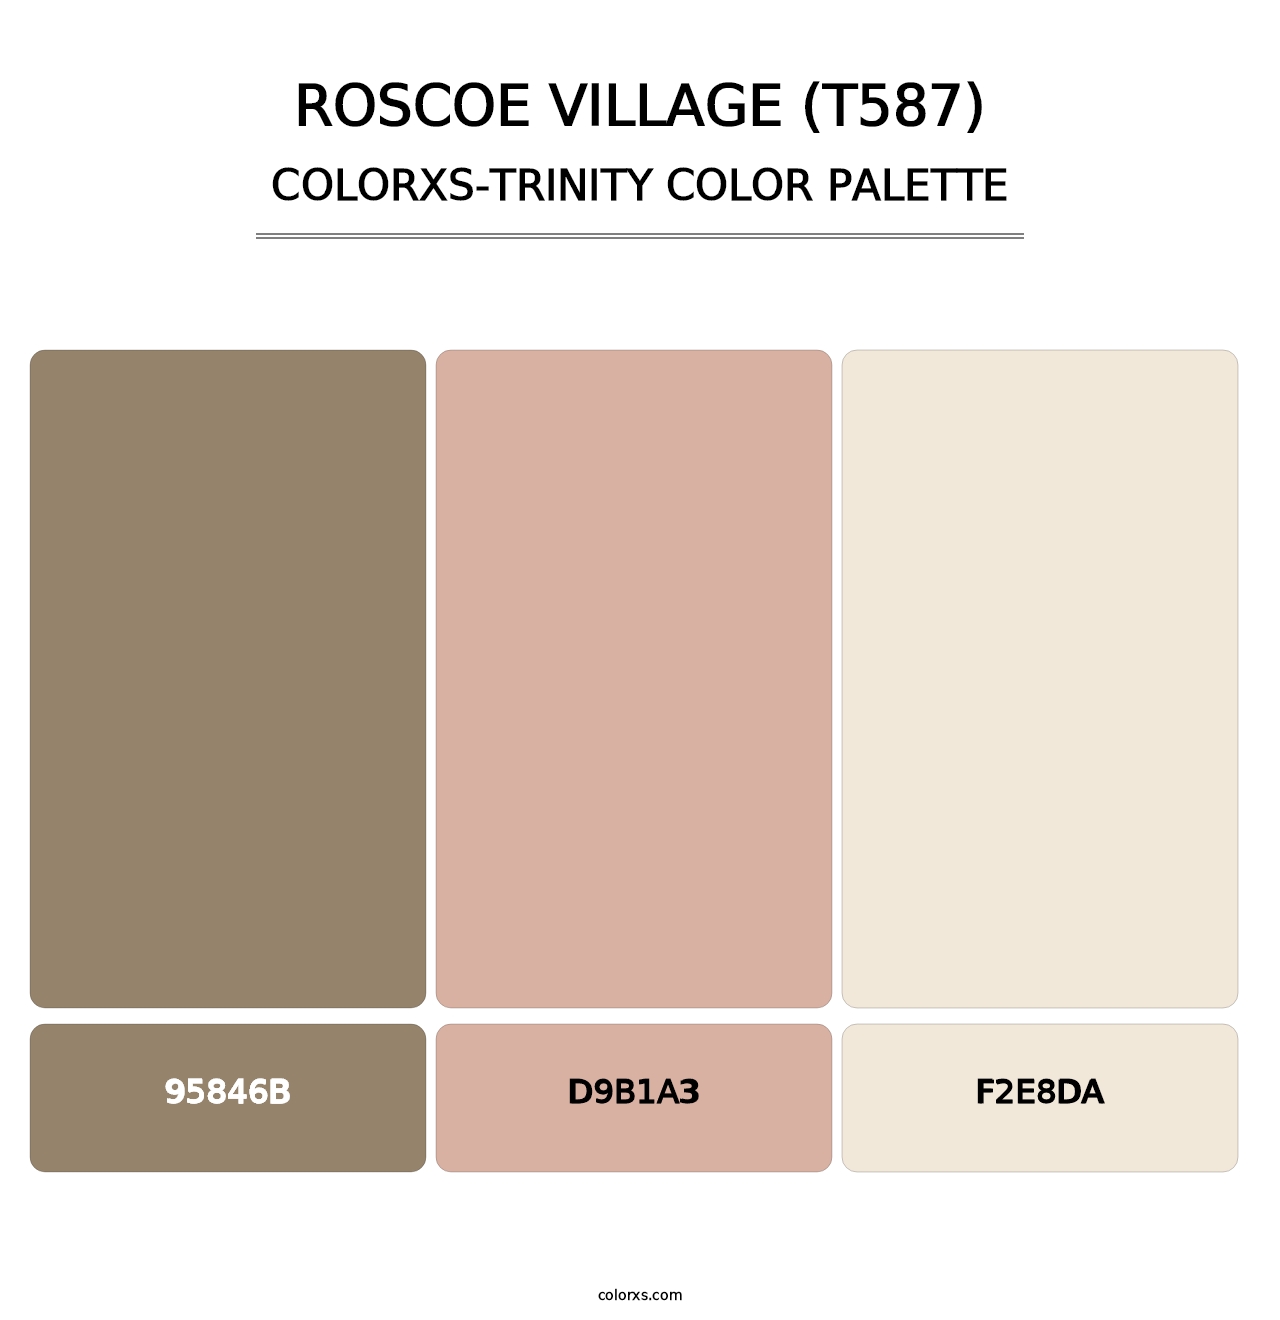 Roscoe Village (T587) - Colorxs Trinity Palette